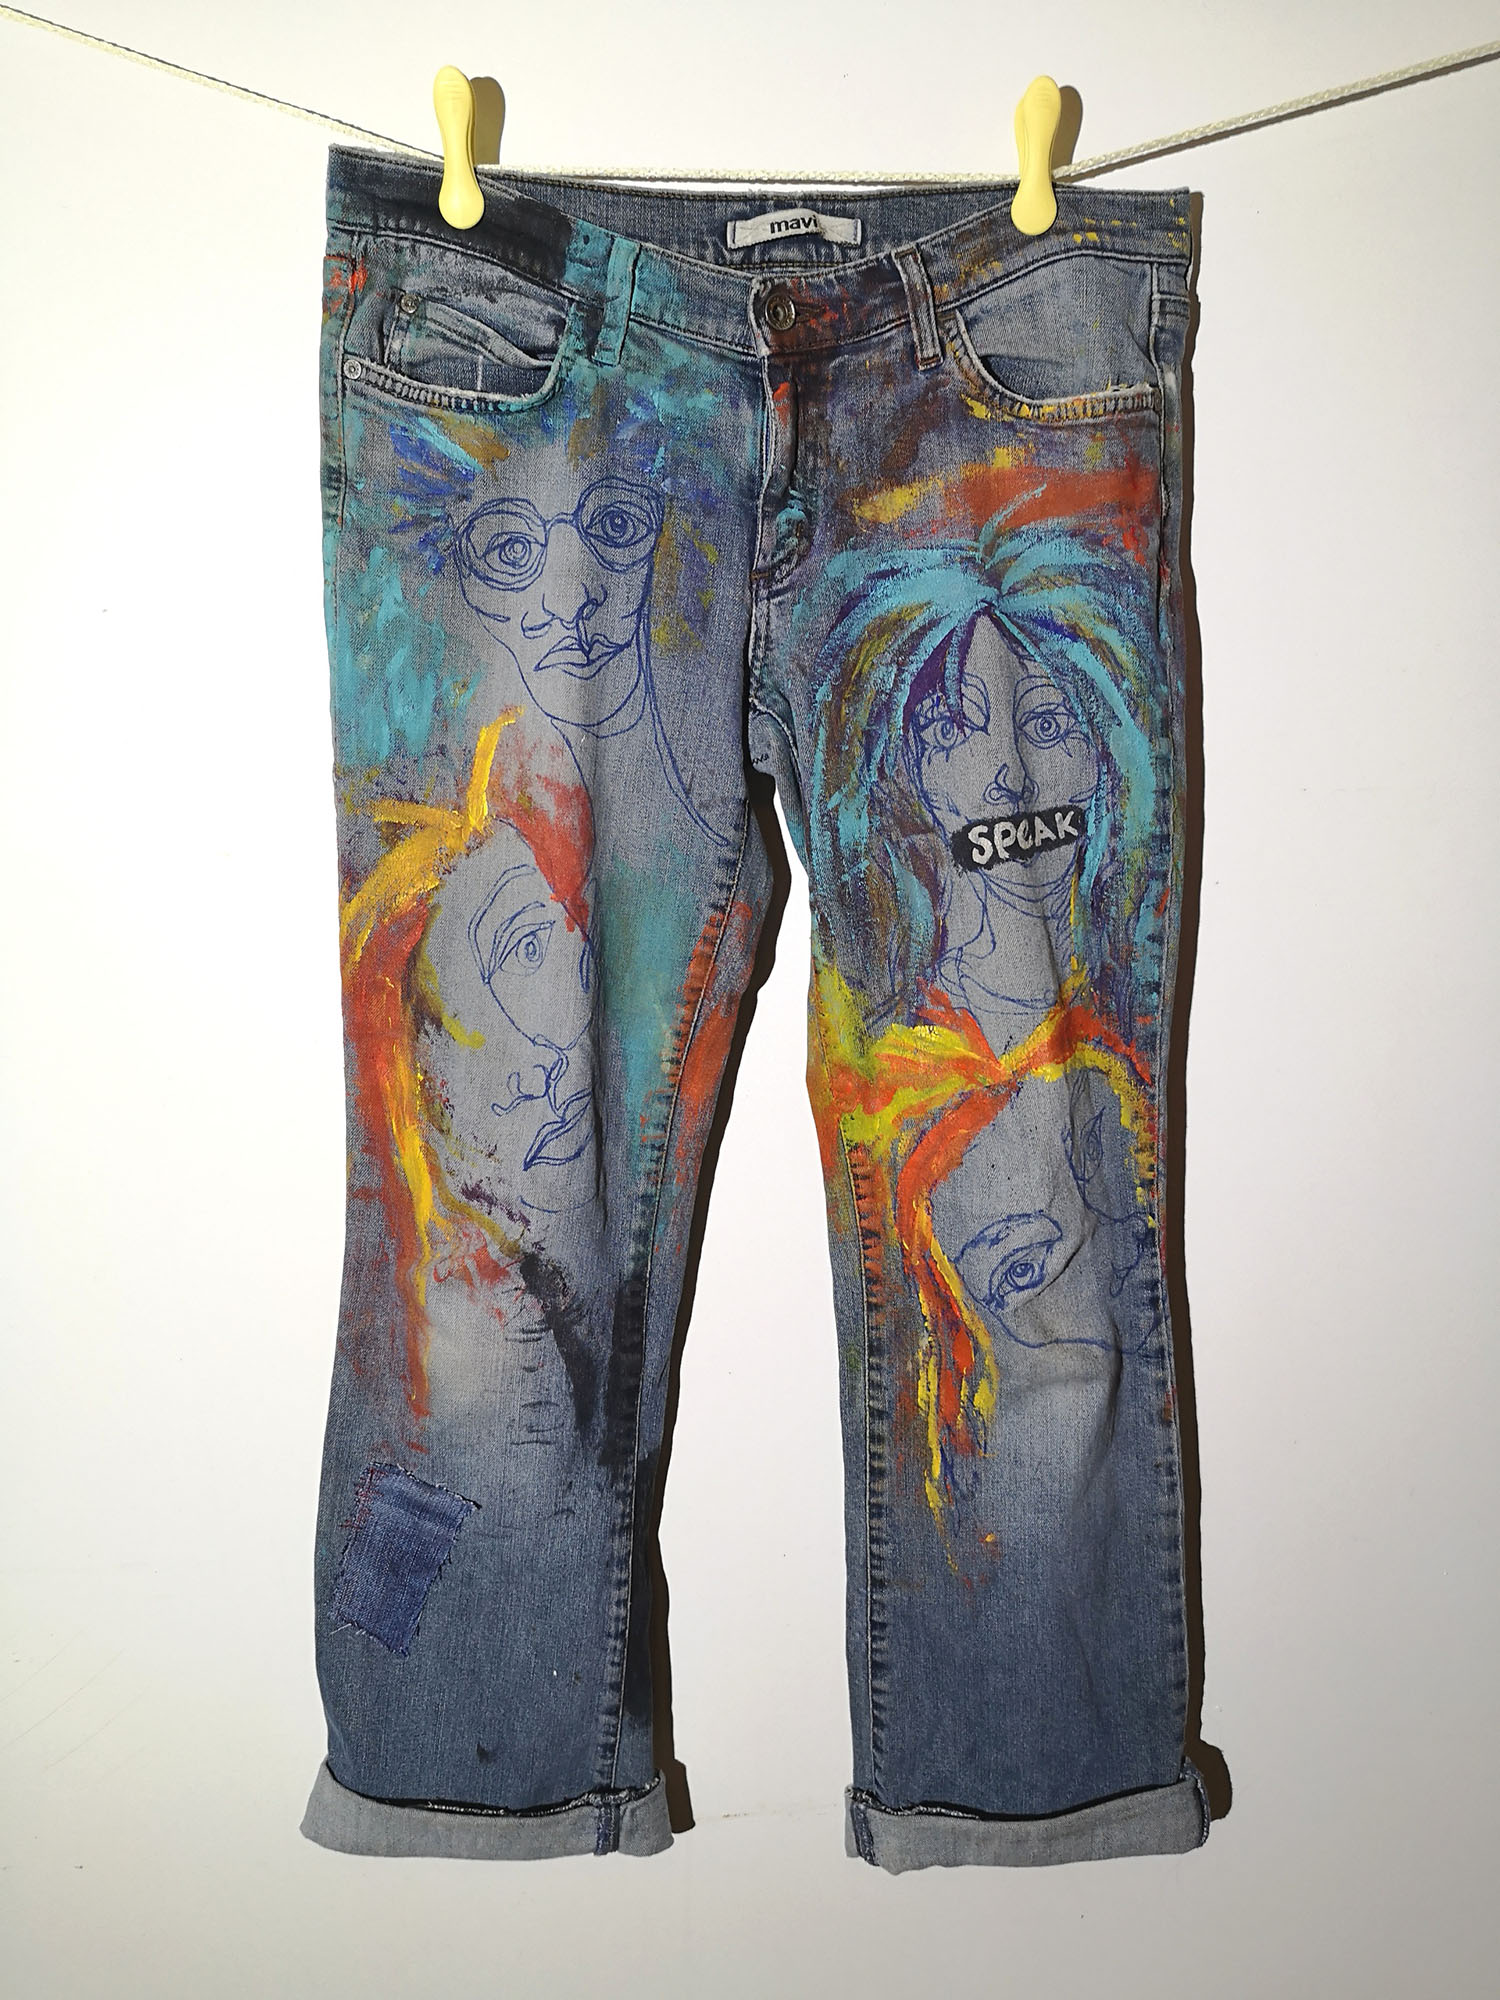 https://www.rebeccabessette.com/wp-content/uploads/2019/09/hand-painted-jeans-denim-vintage-mavi-abstract-splatter-art-rebecca-bessette-1.jpg